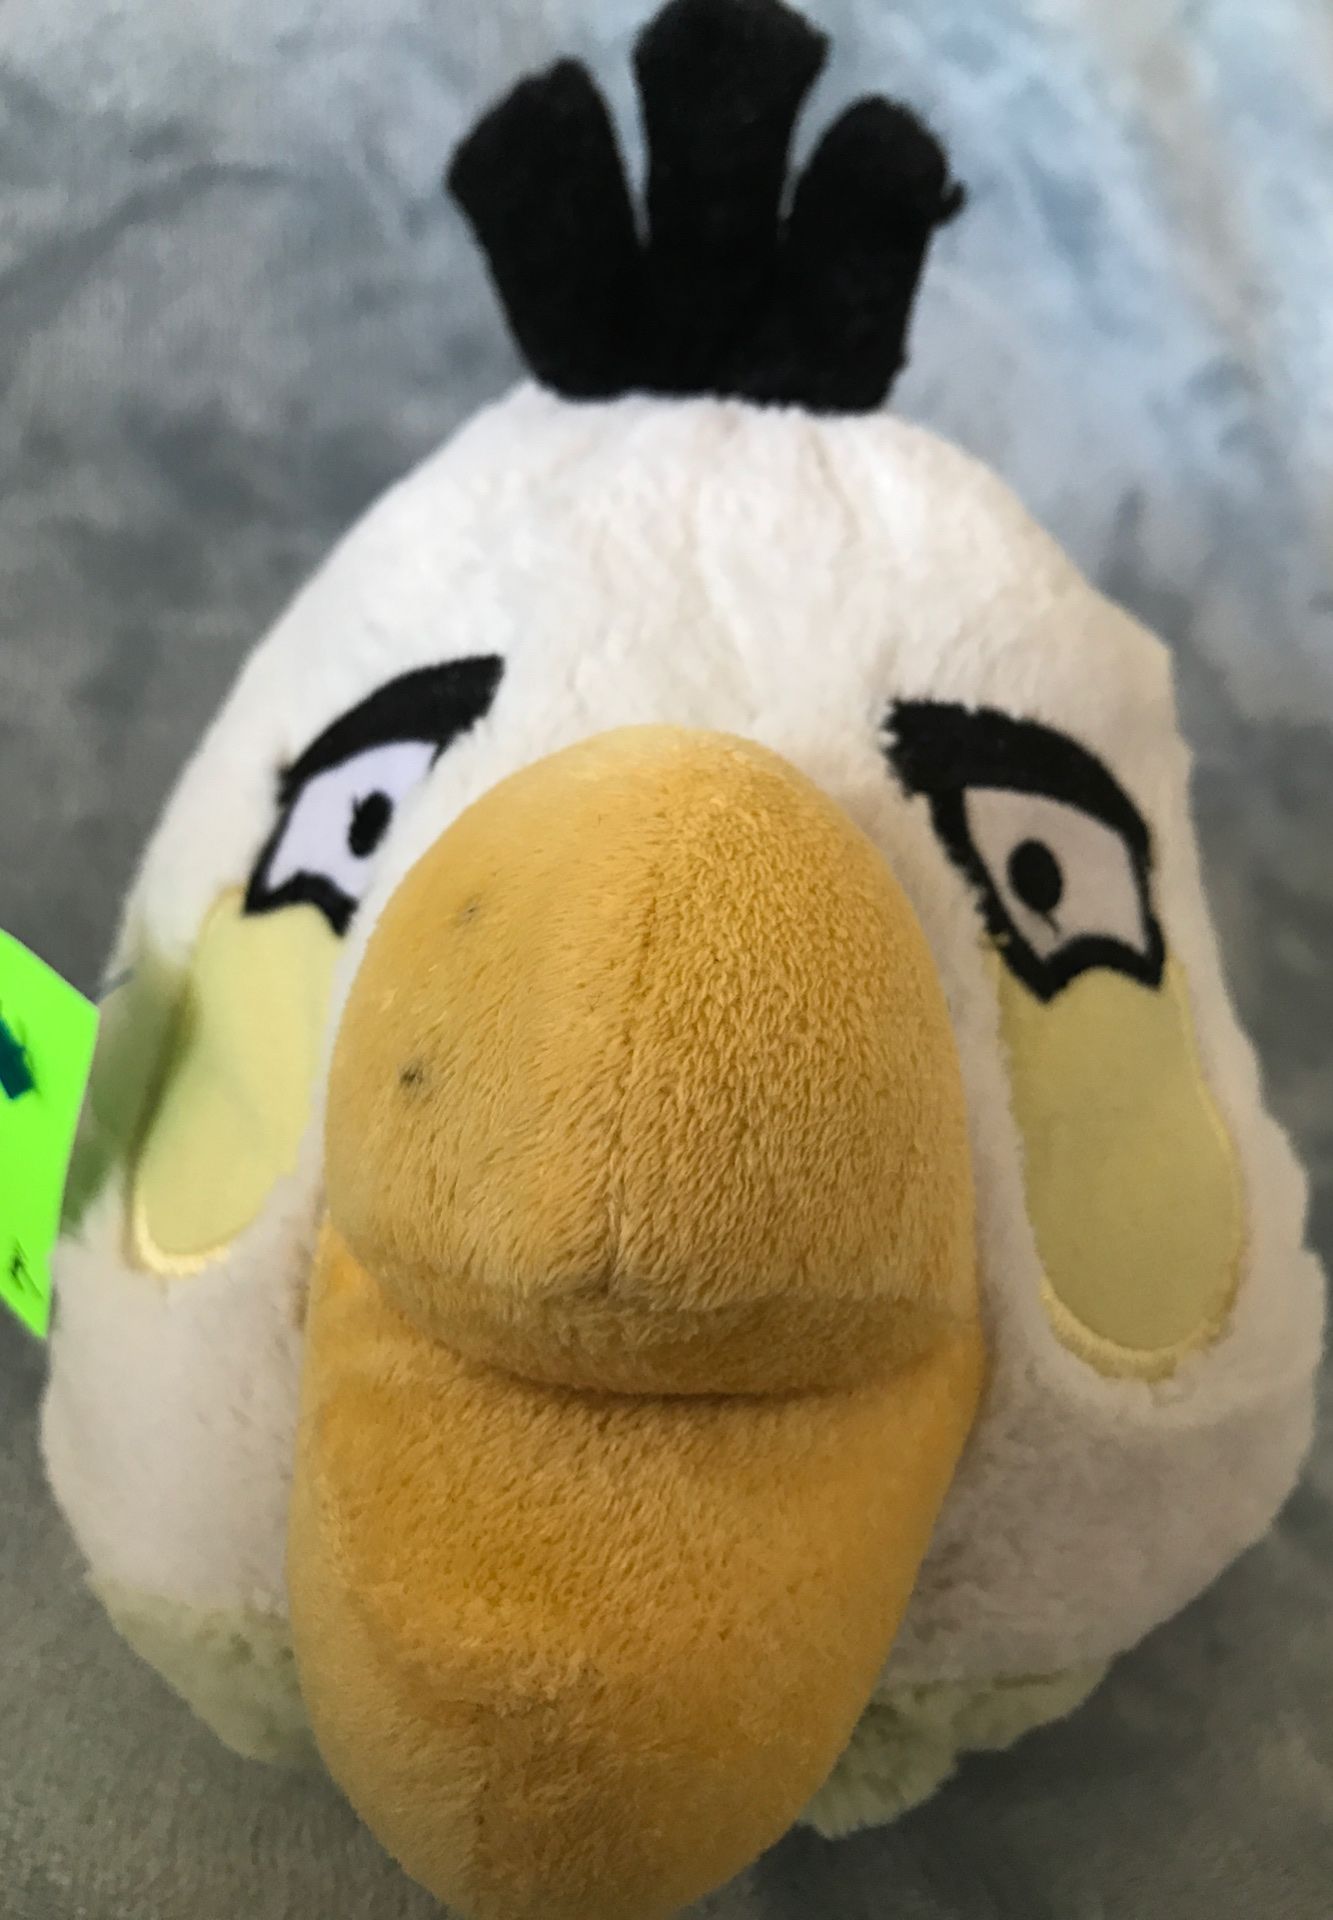 7” Angry Birds stuffed animal